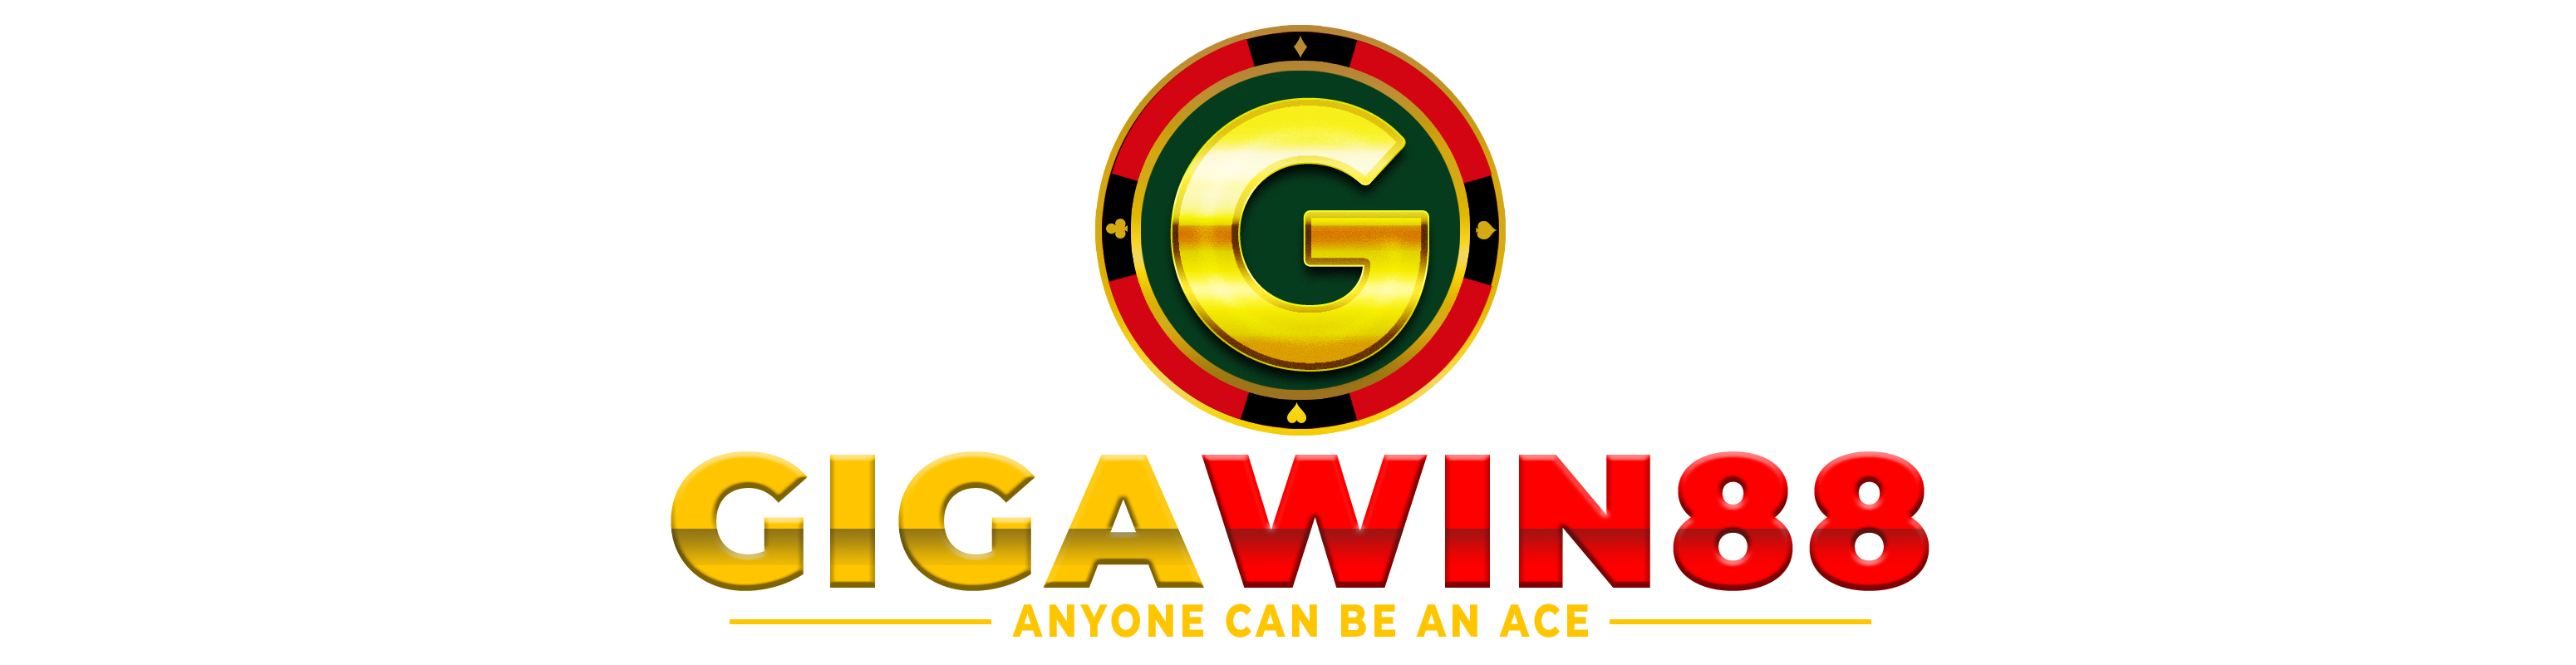 logo GIGAWIN88